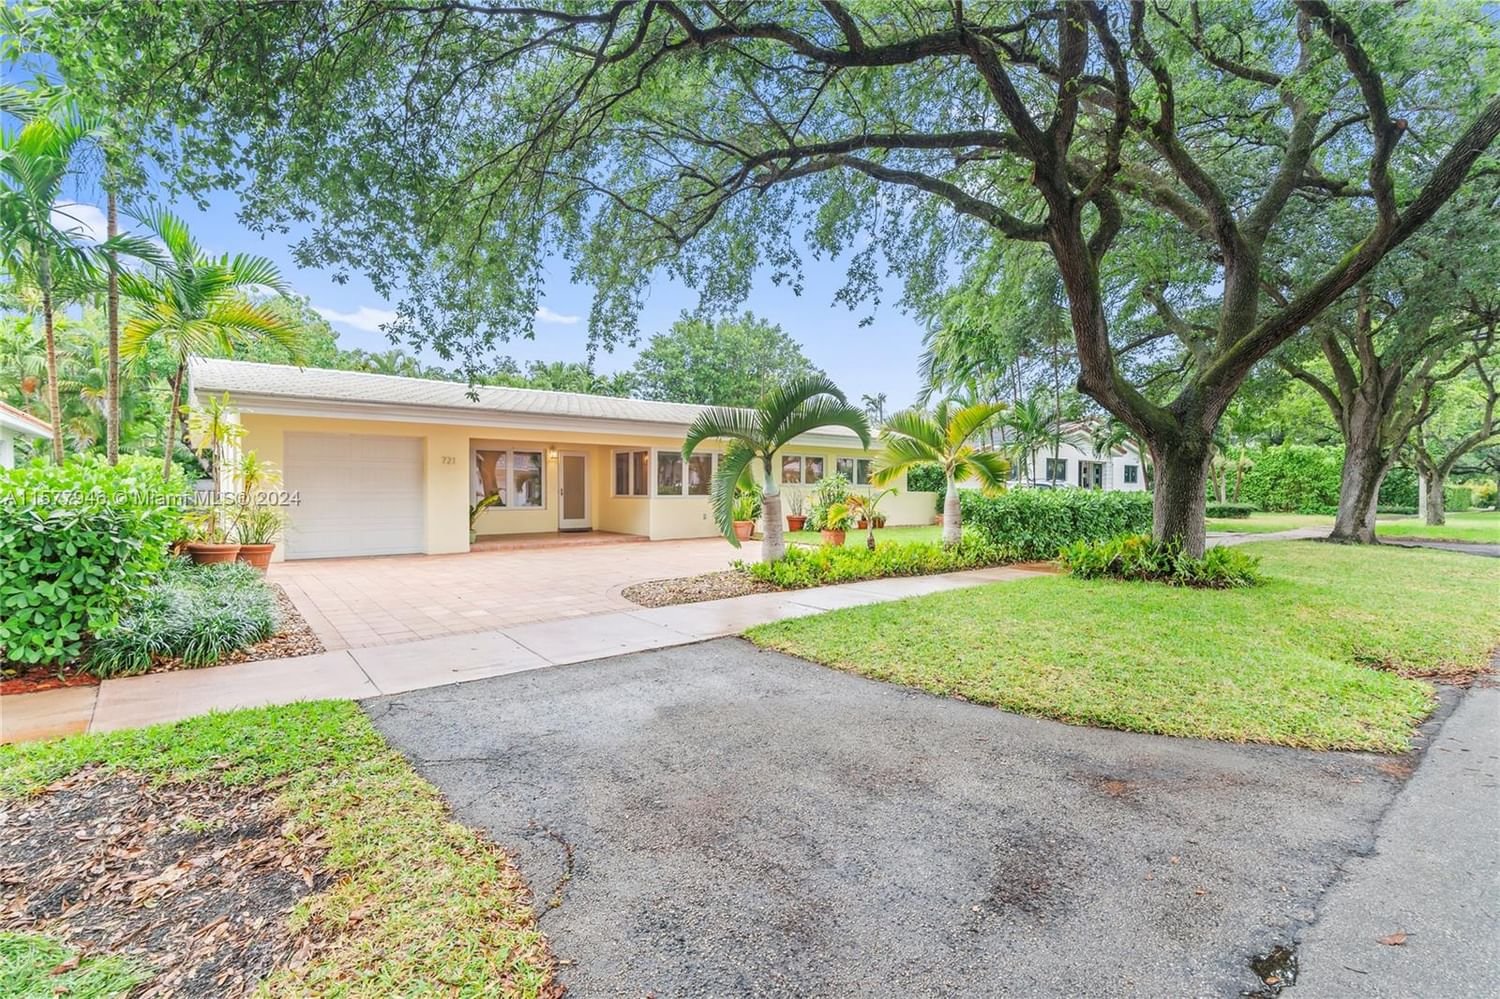 Real estate property located at 721 Sistina Ave, Miami-Dade County, CG RIVIERA SEC 3 REV, Coral Gables, FL